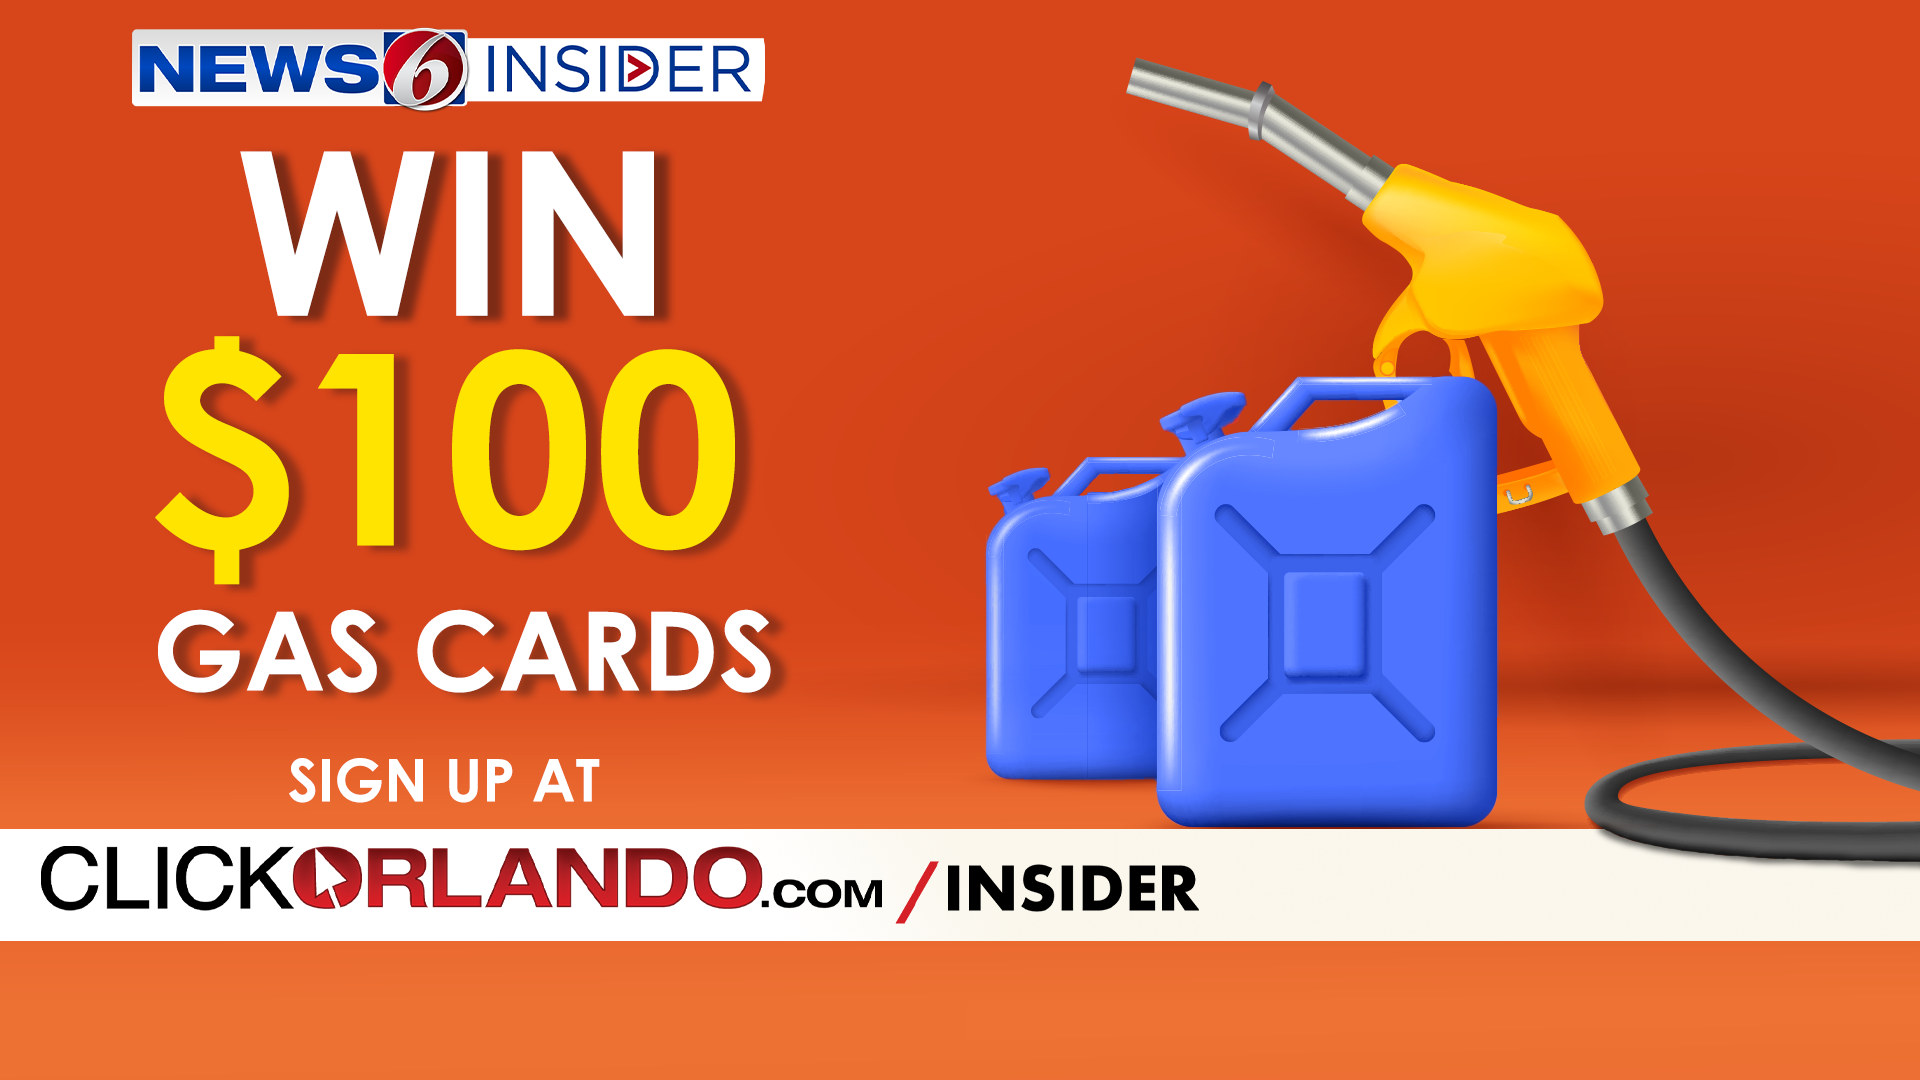 Win $100 In Mastercard Rewards By Winning PXG's GEN6 Driver Challenge